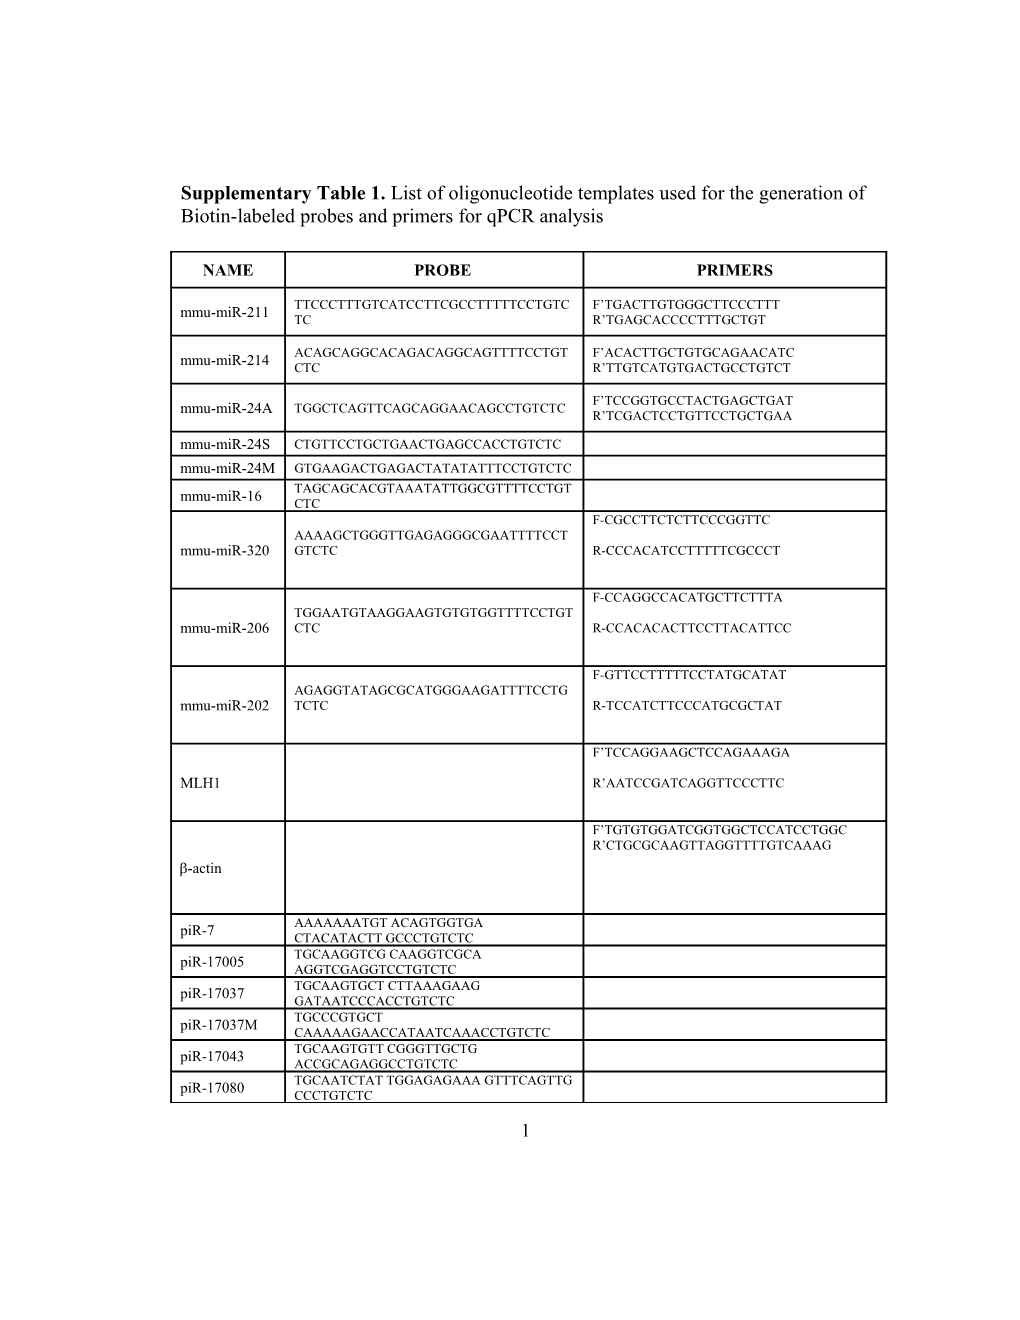 CHRO 1190 Supplementary Table S